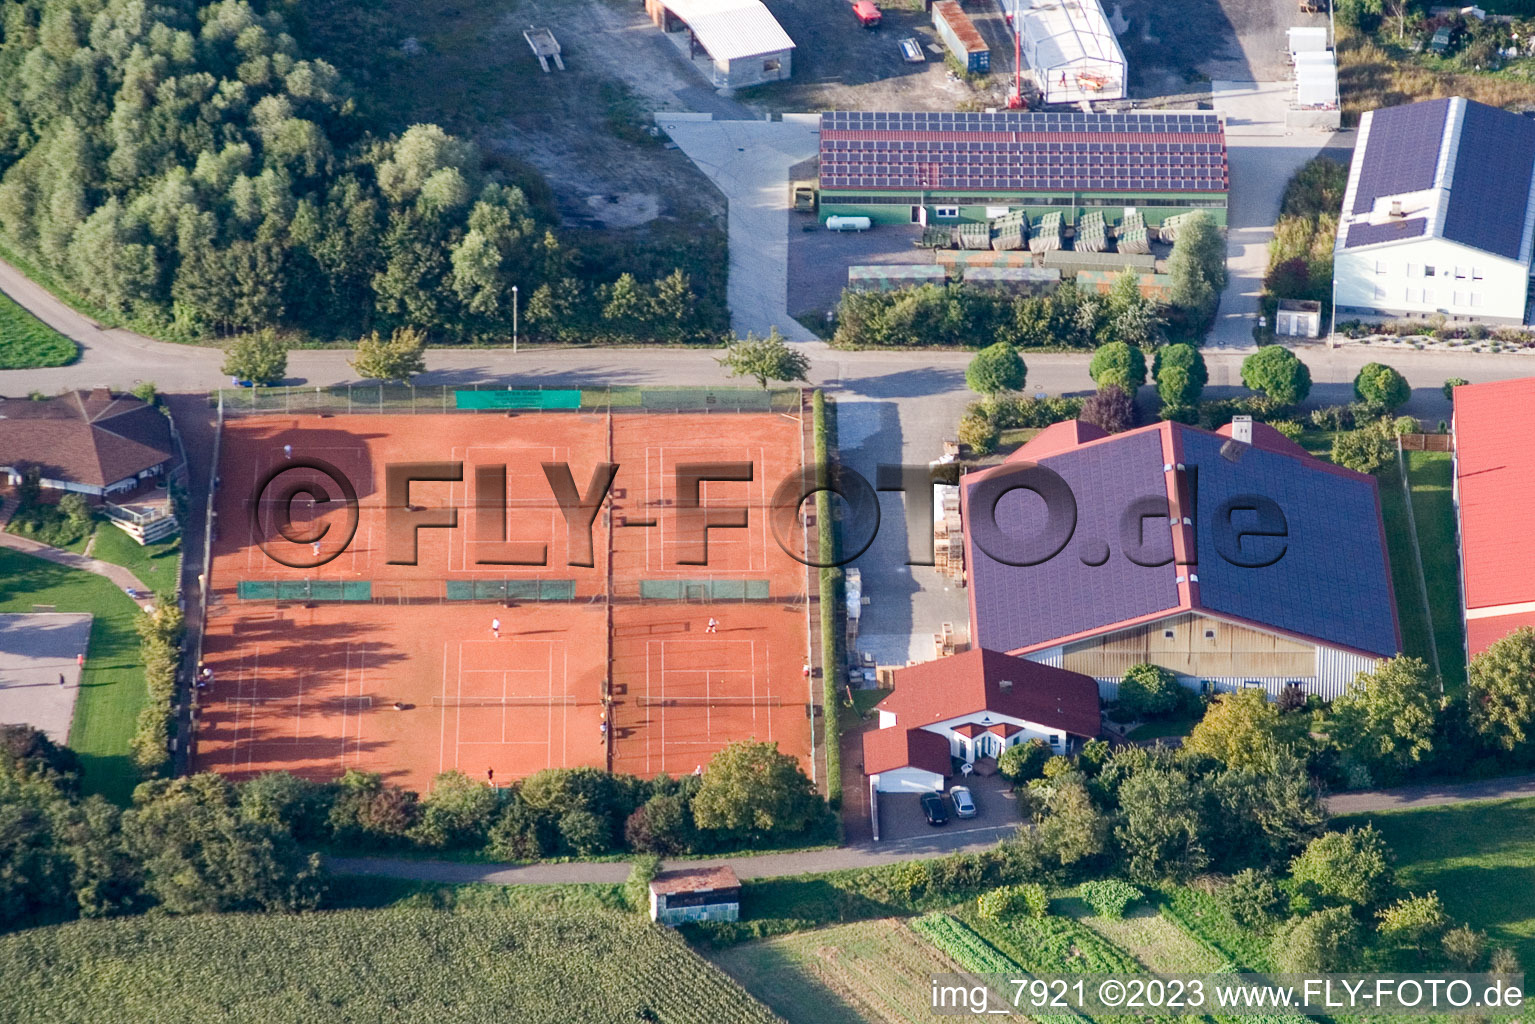 Tennis club in Neuburg in the state Rhineland-Palatinate, Germany